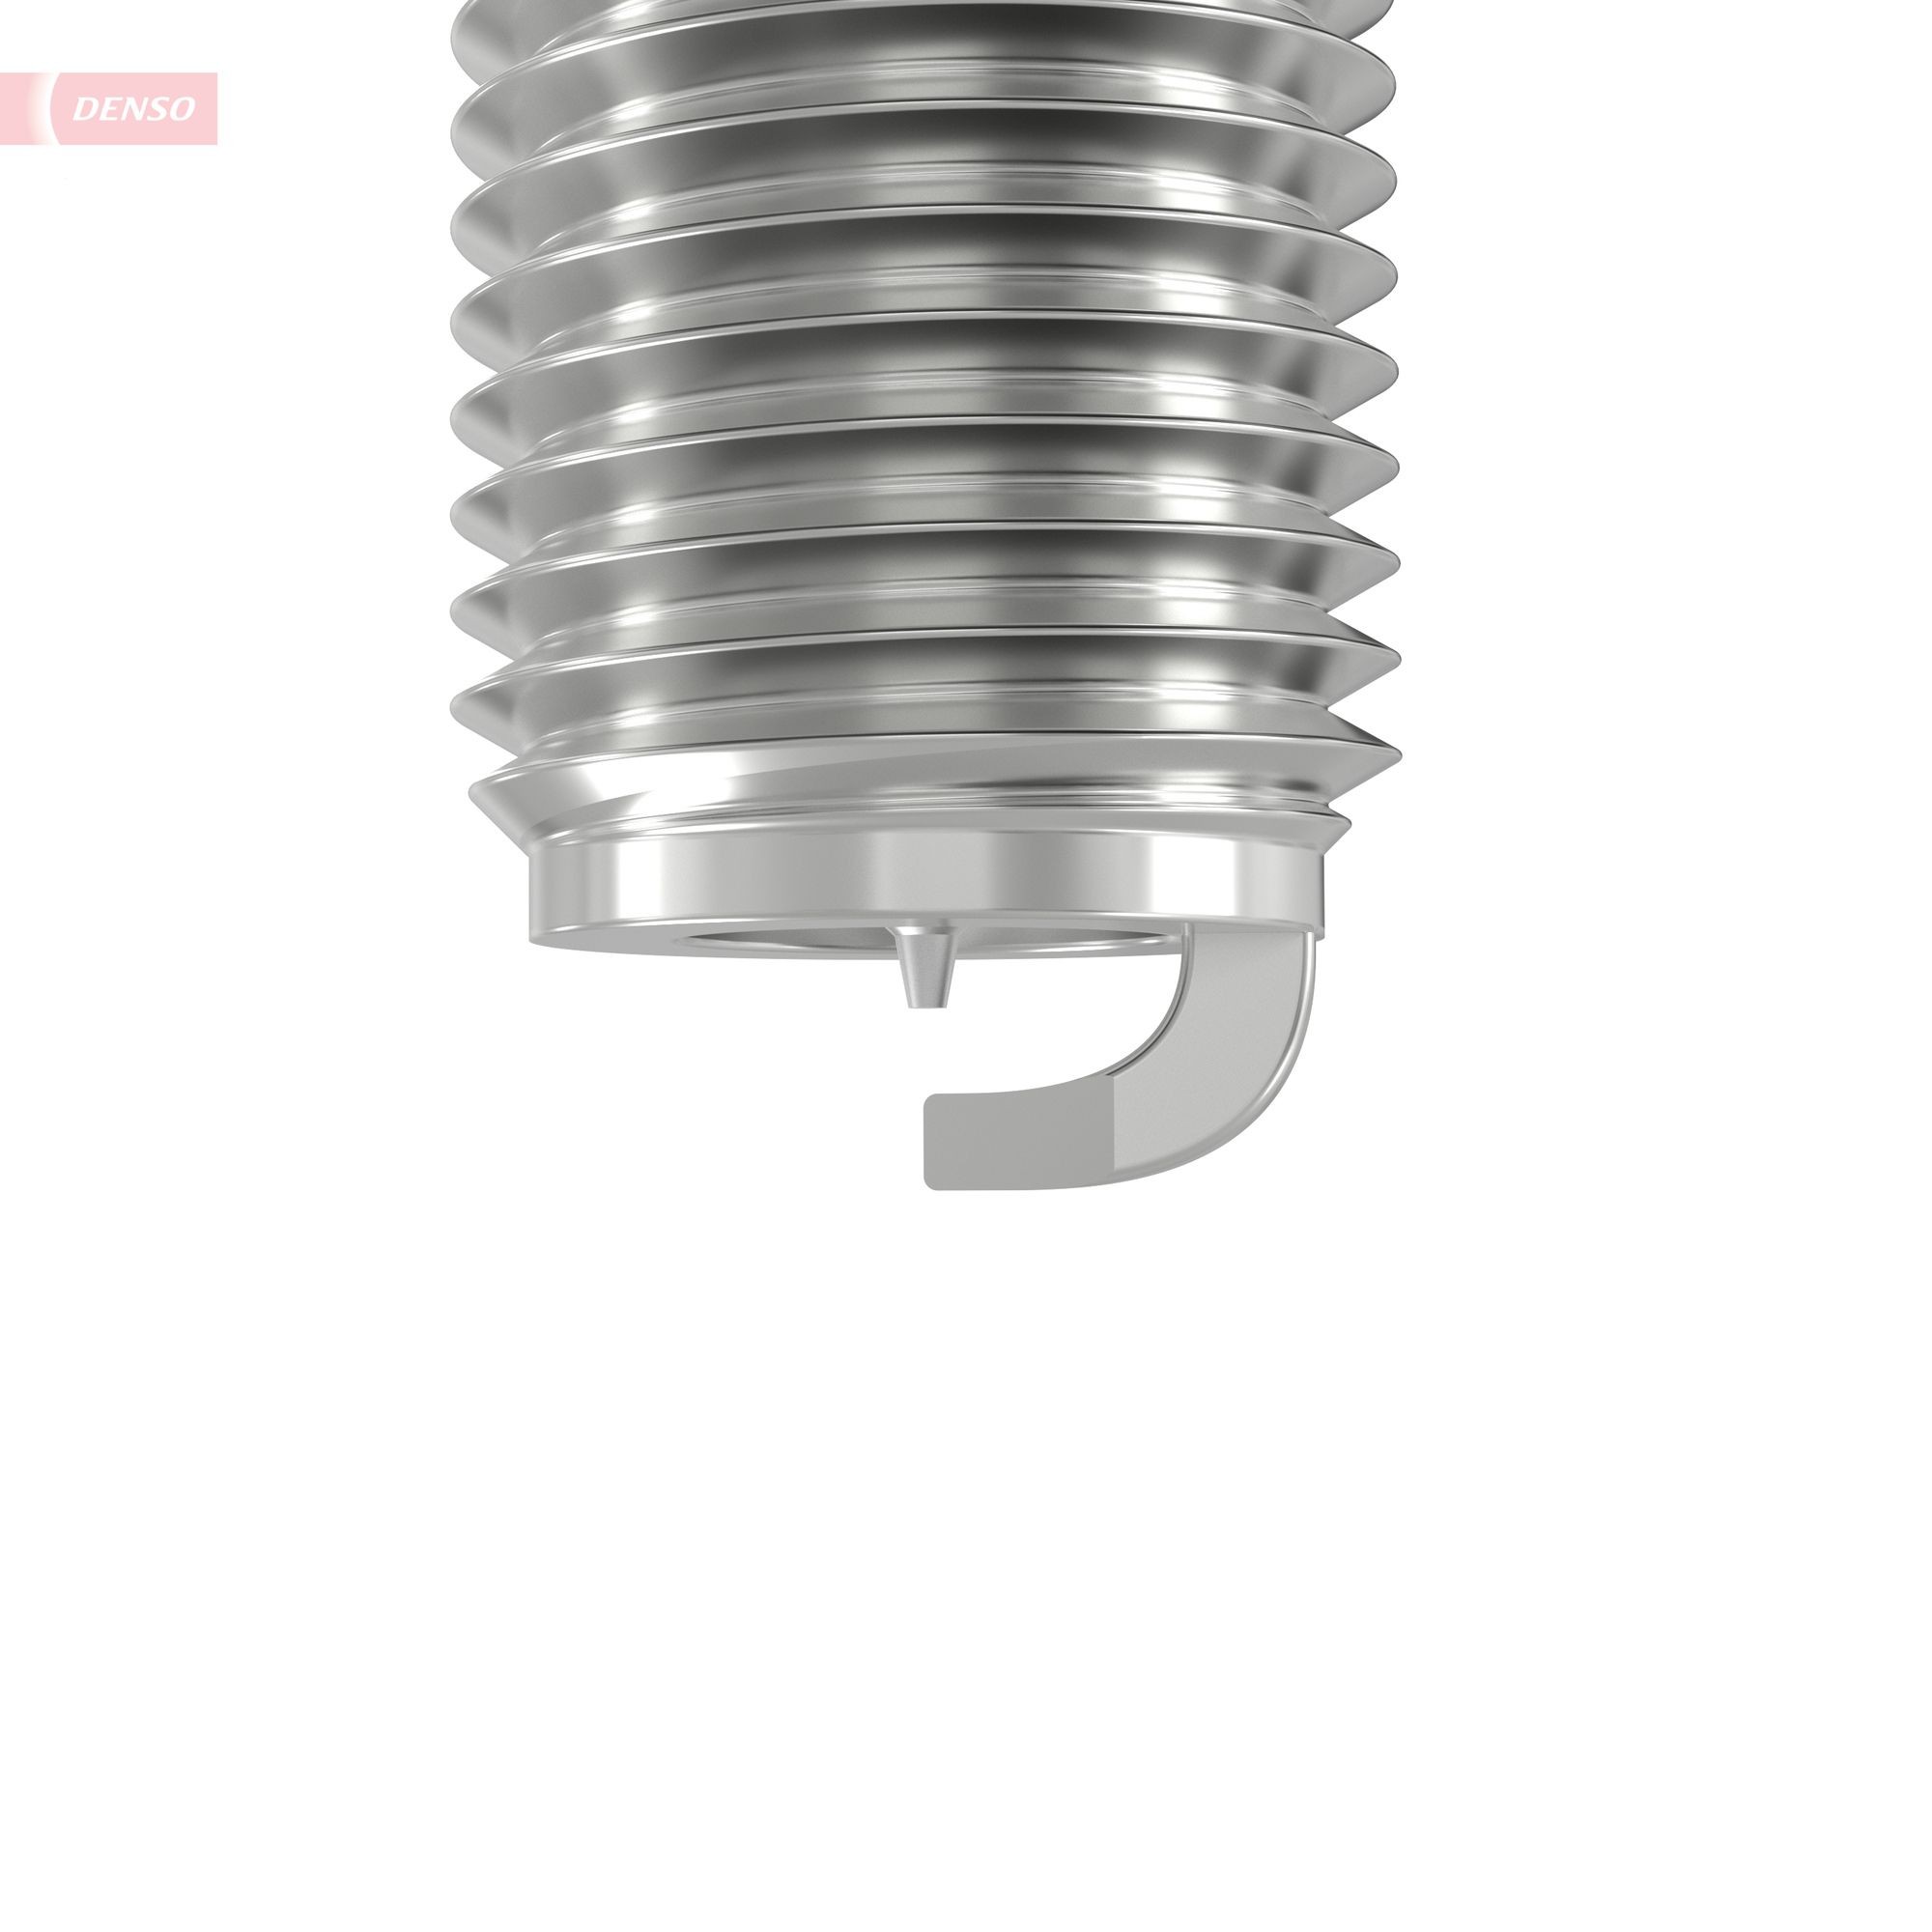 DENSO IU20 Engine spark plug Spanner Size: 16